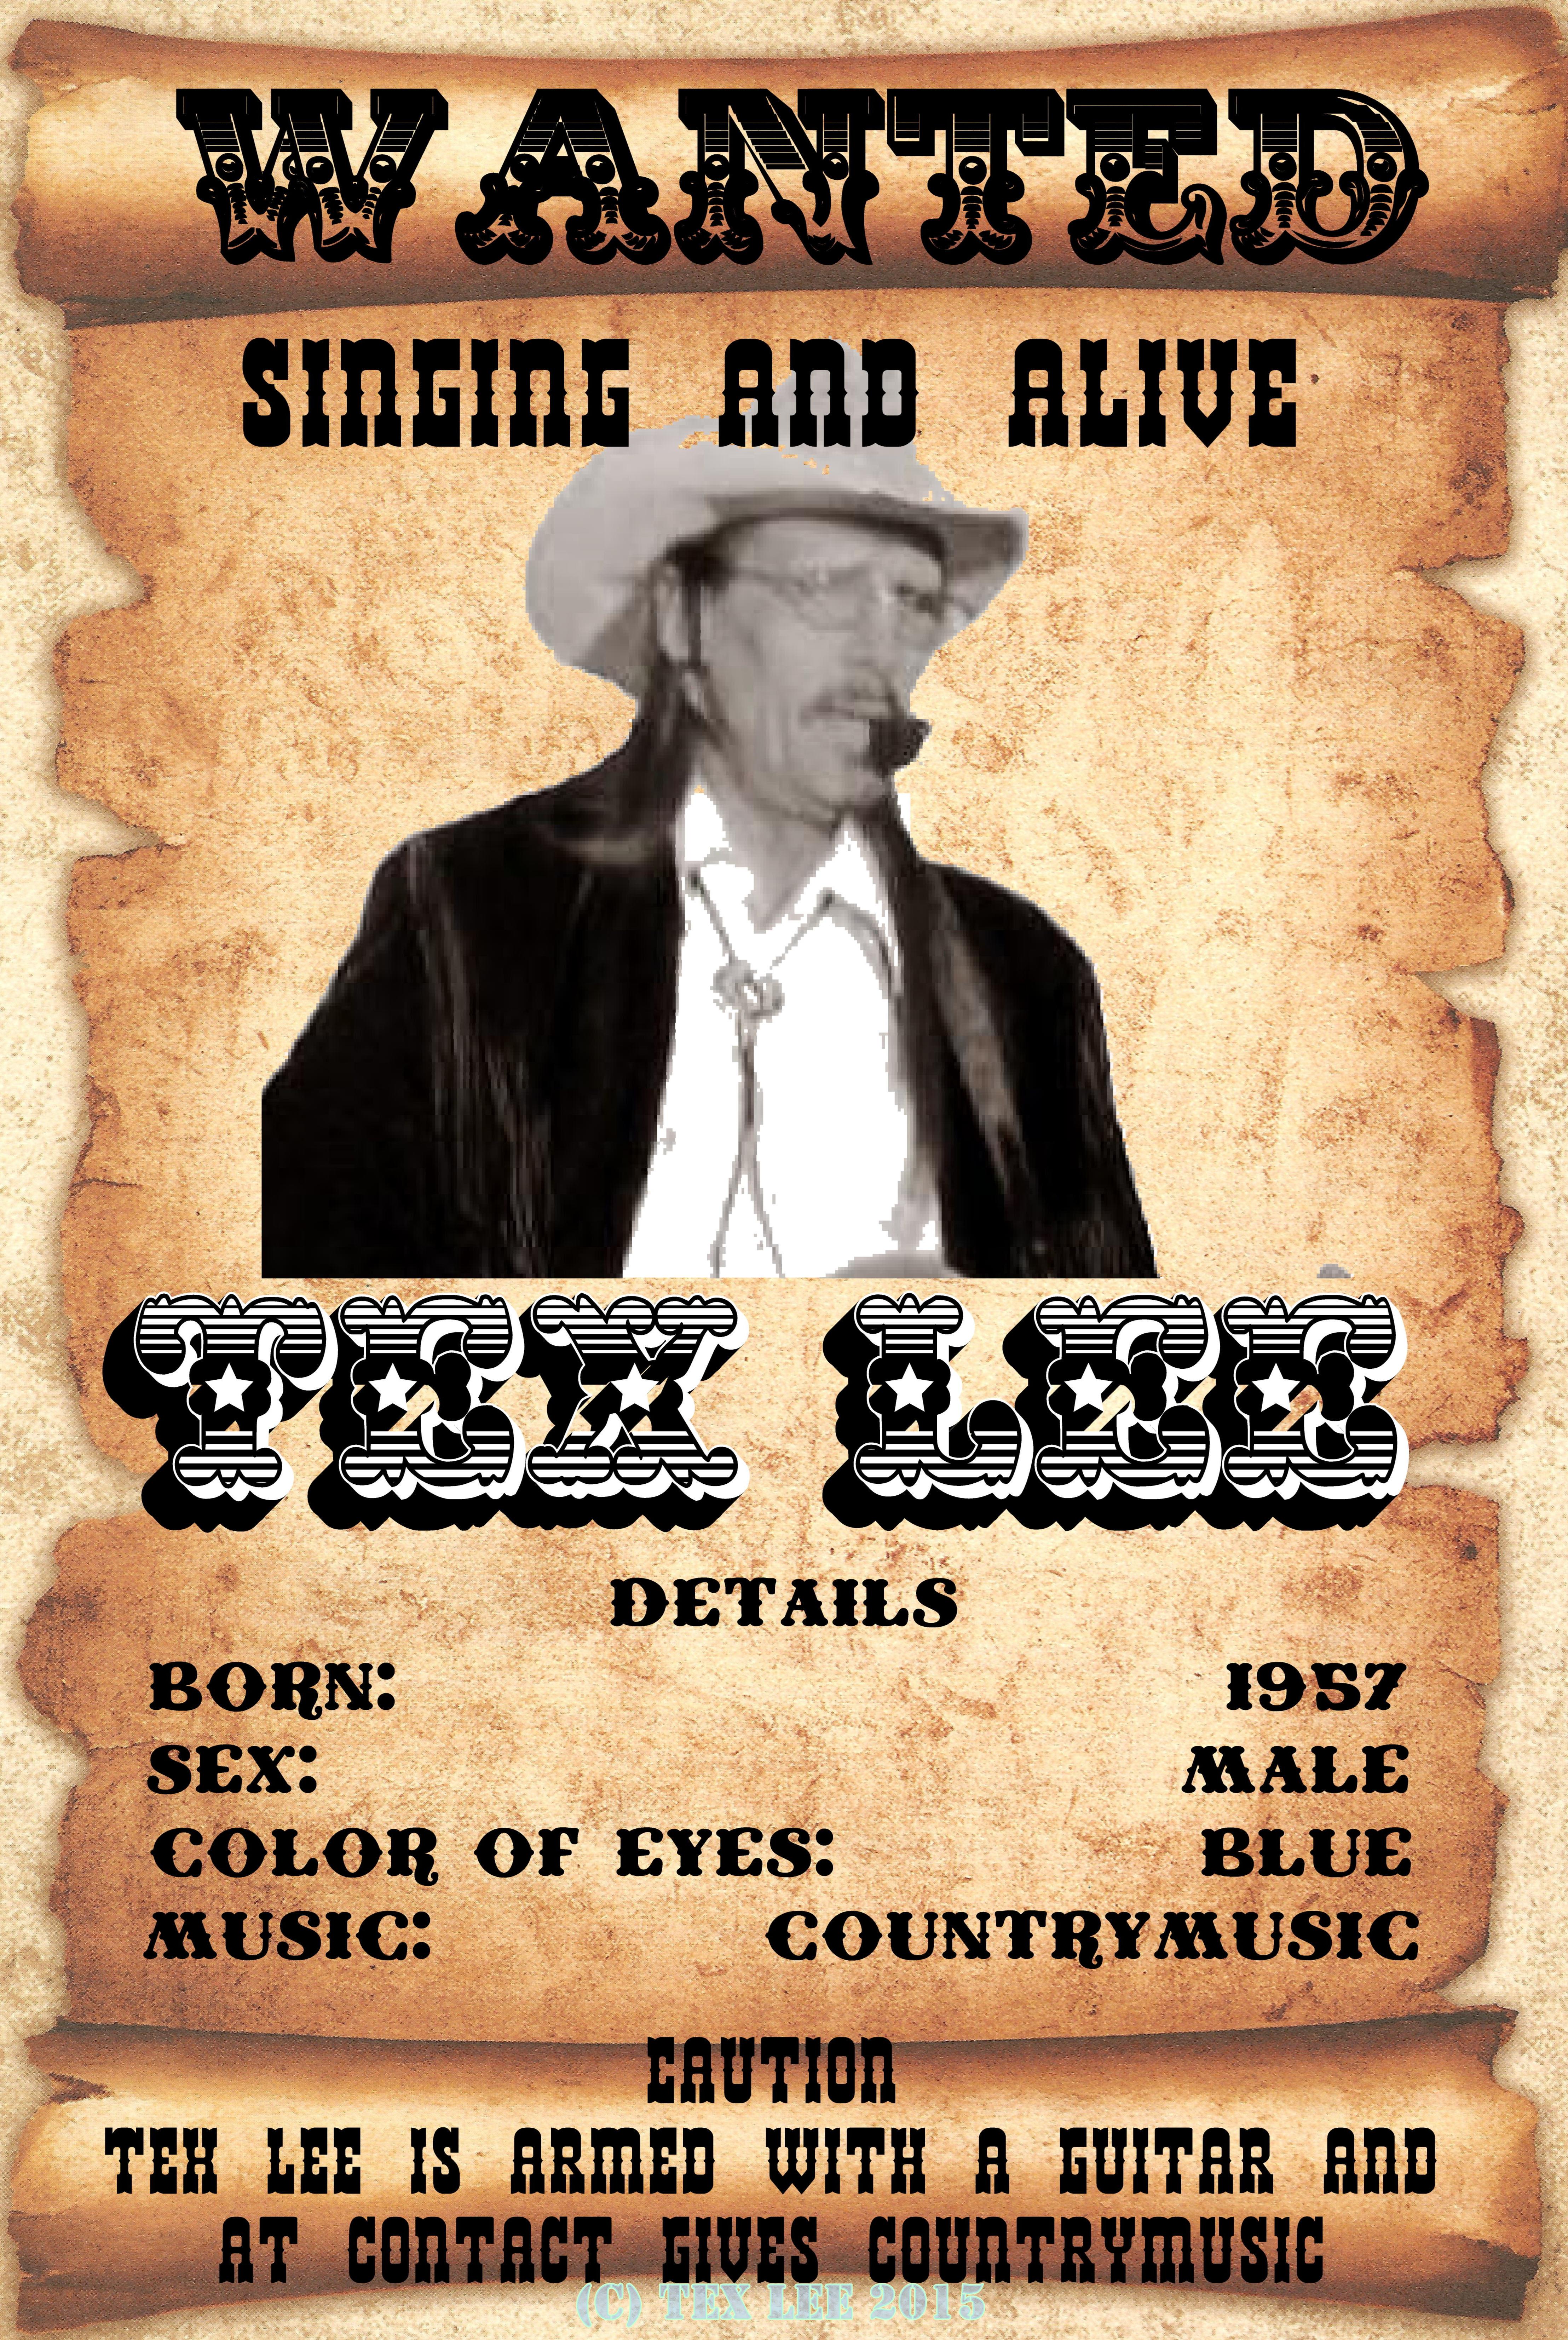 Tex Lee Wanted3